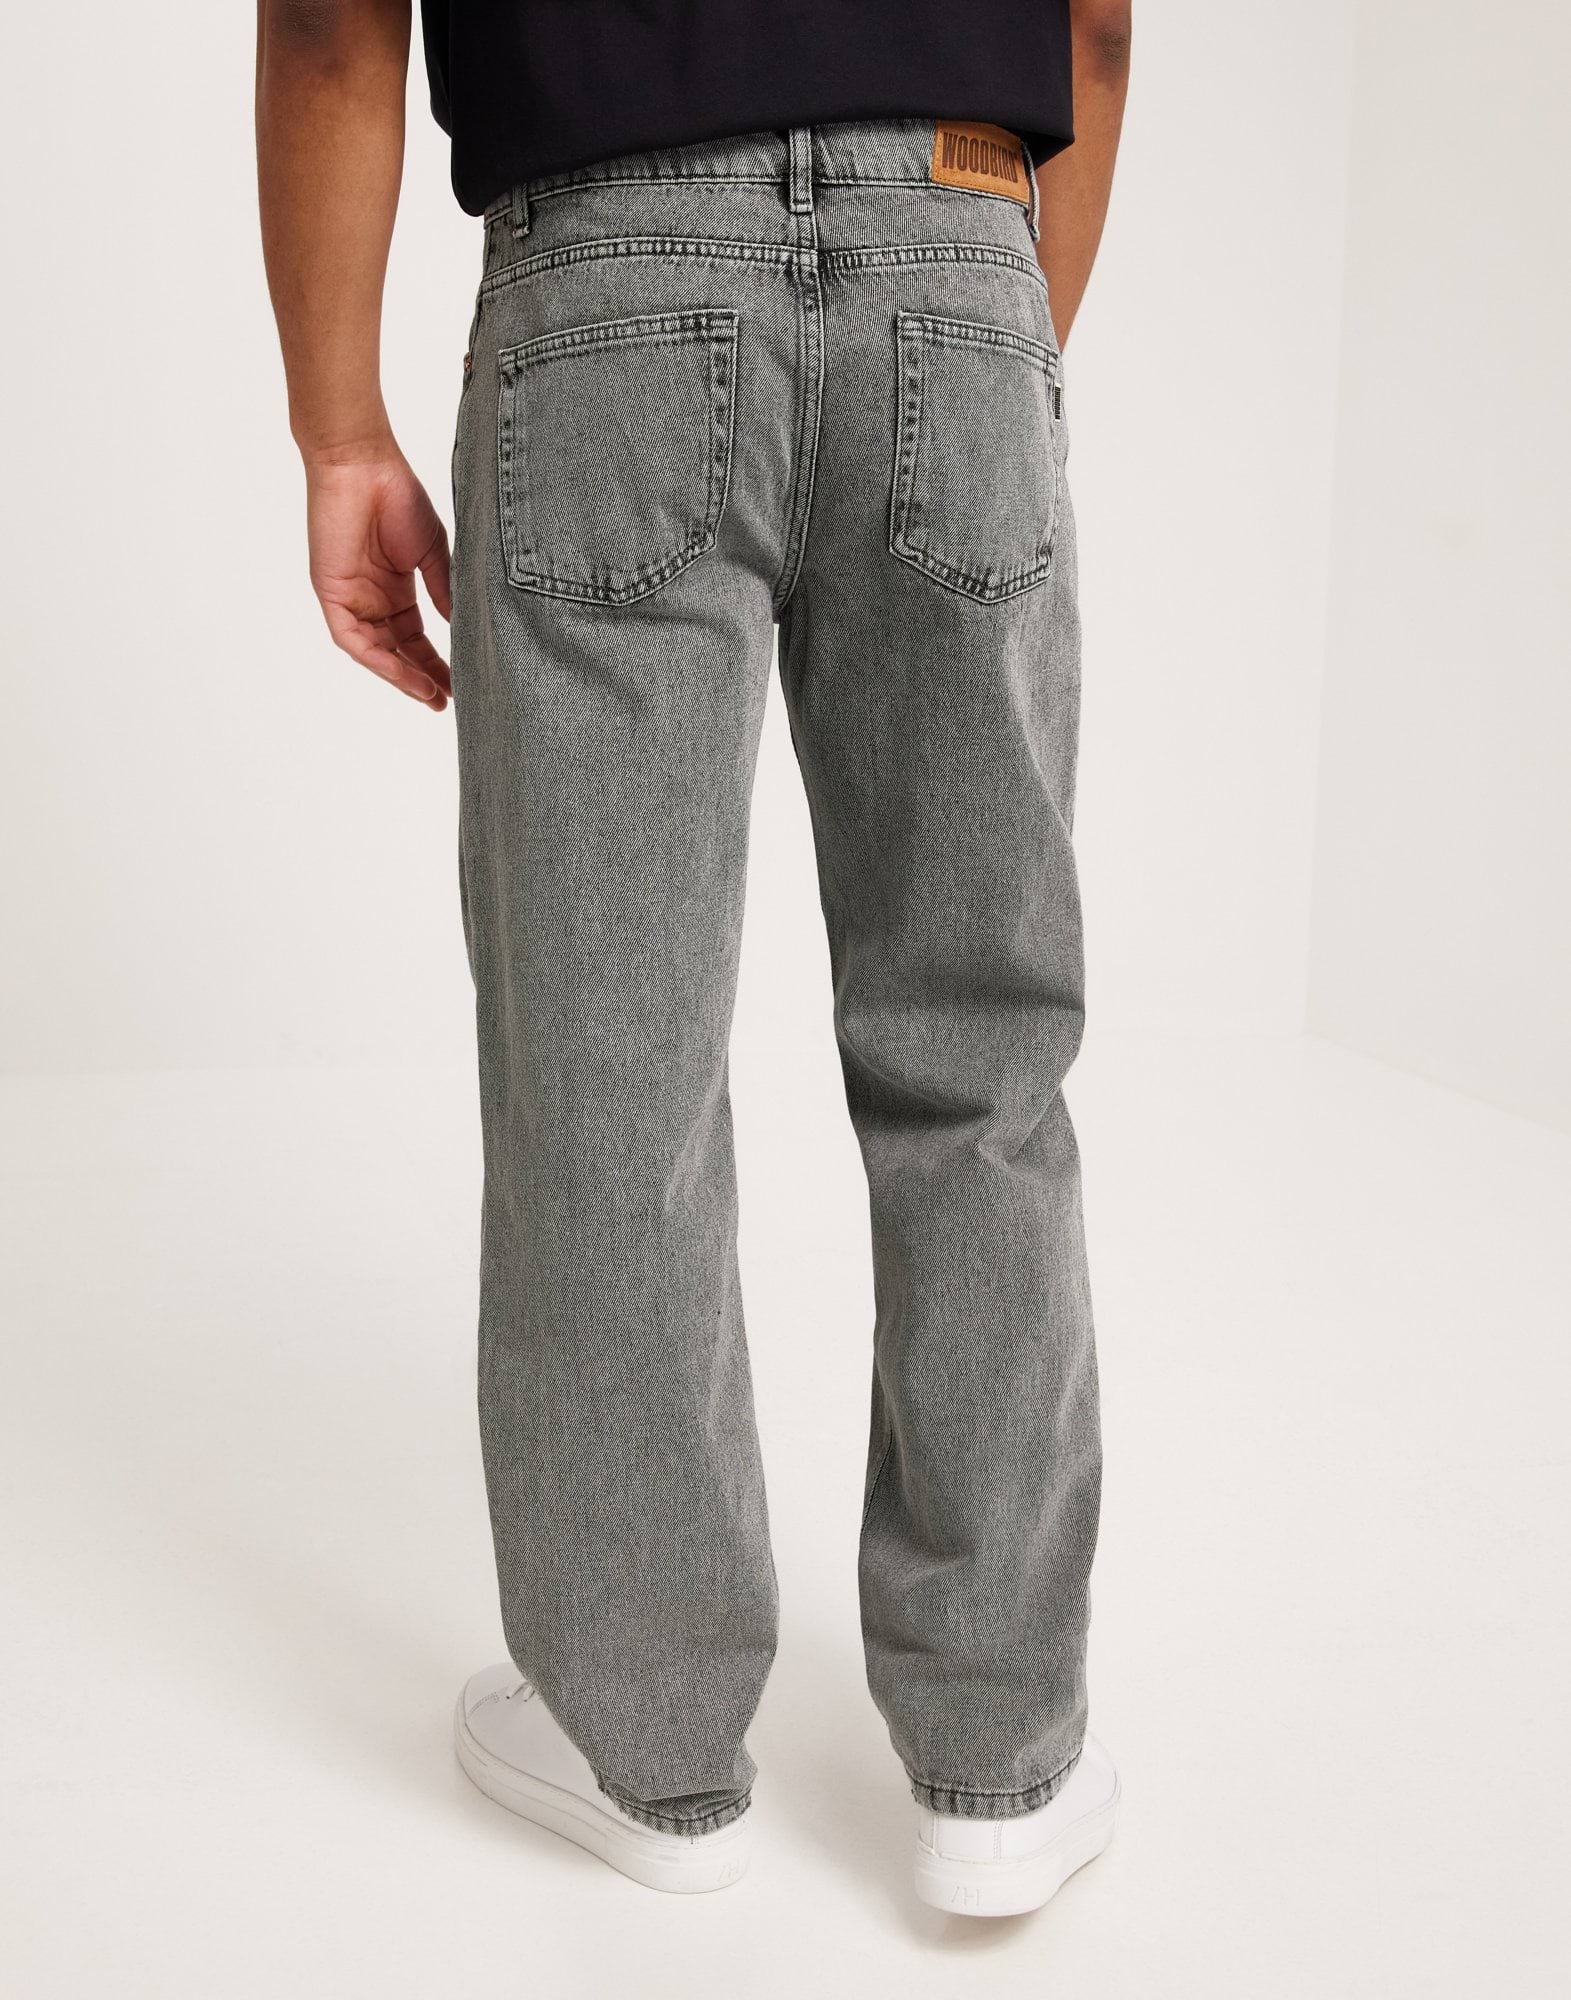 Leroy Ash Grey Jeans